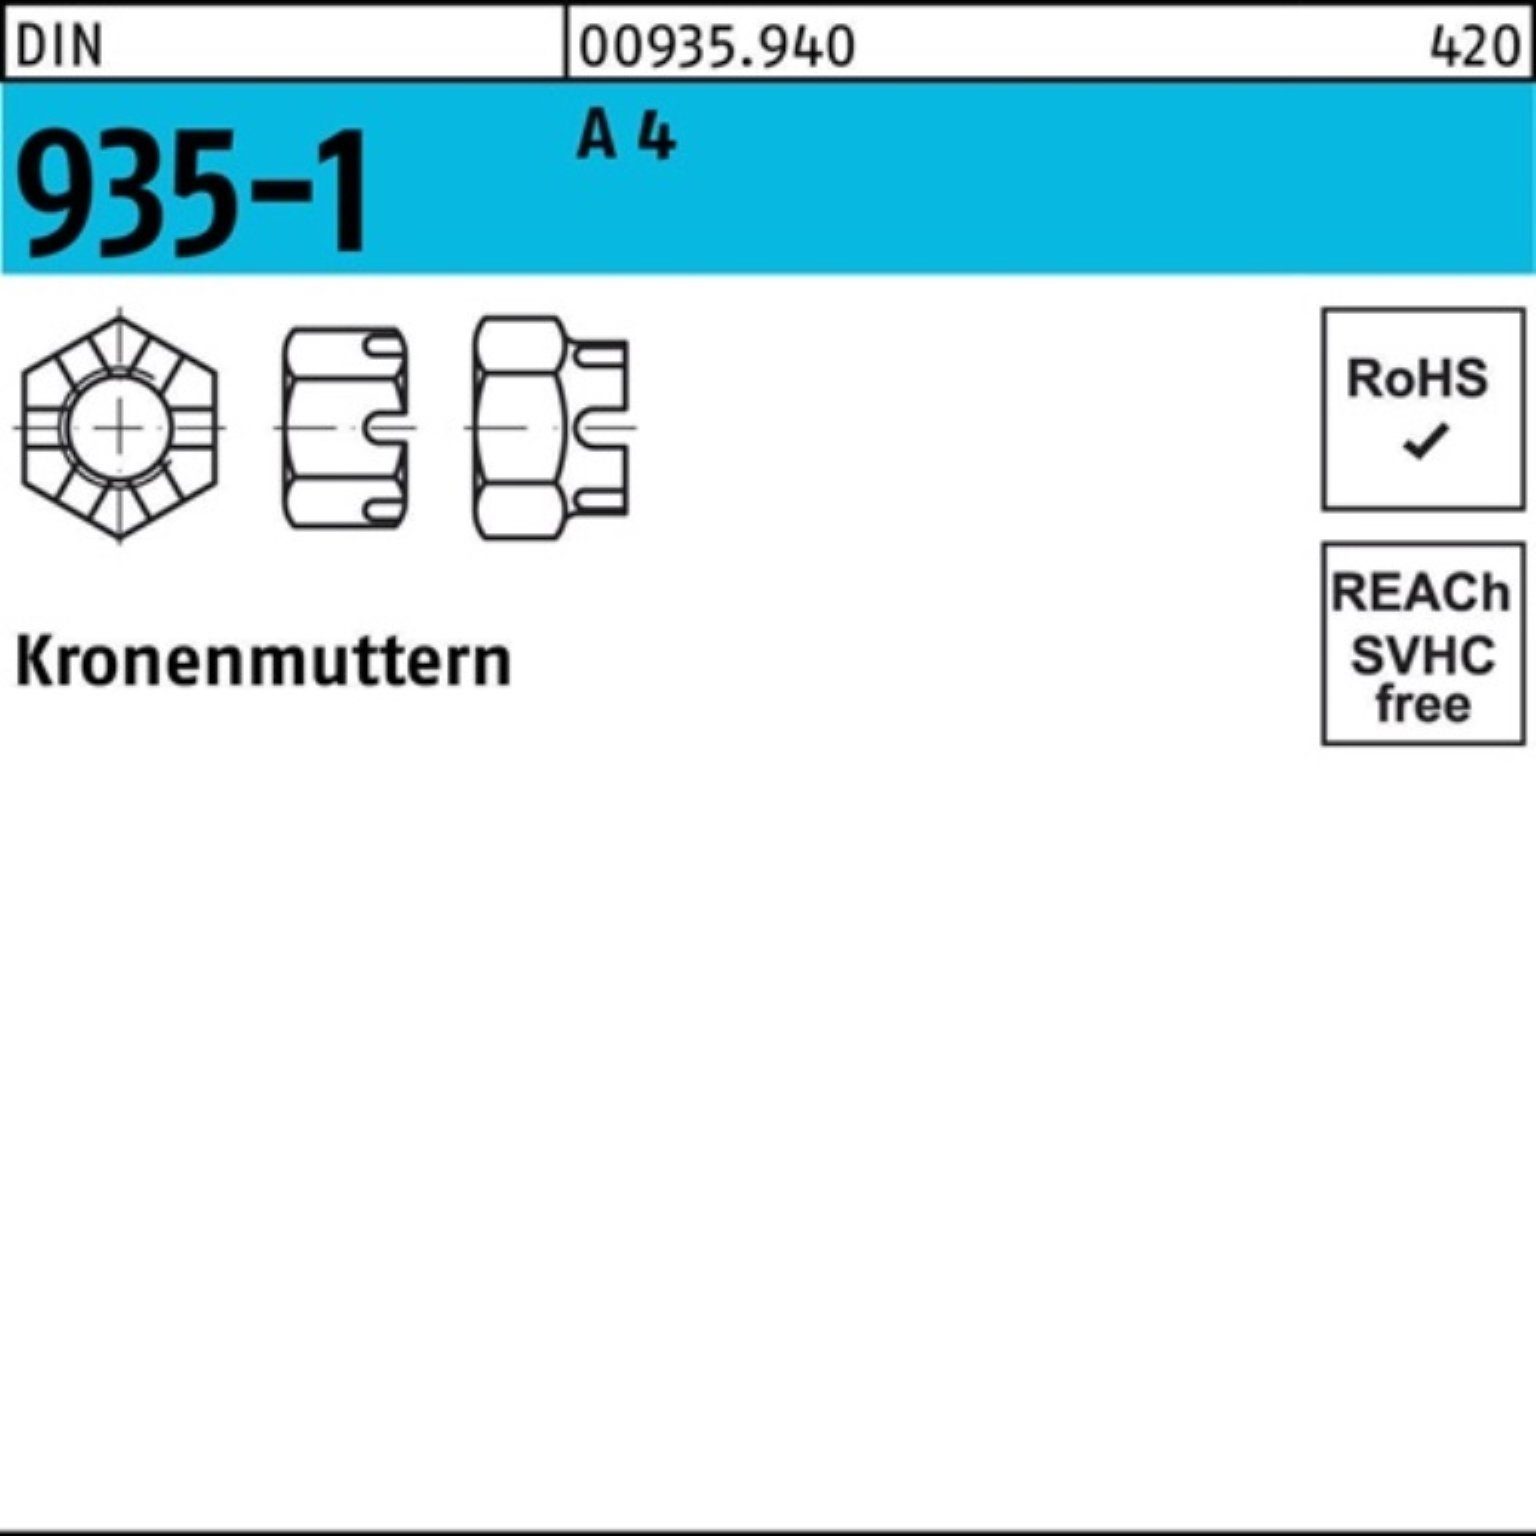 Reyher Kronenmutter 100er Pack 935-1 4 Kronenmutter A 1 Stück 935-1 A 4 Krone DIN DIN M16